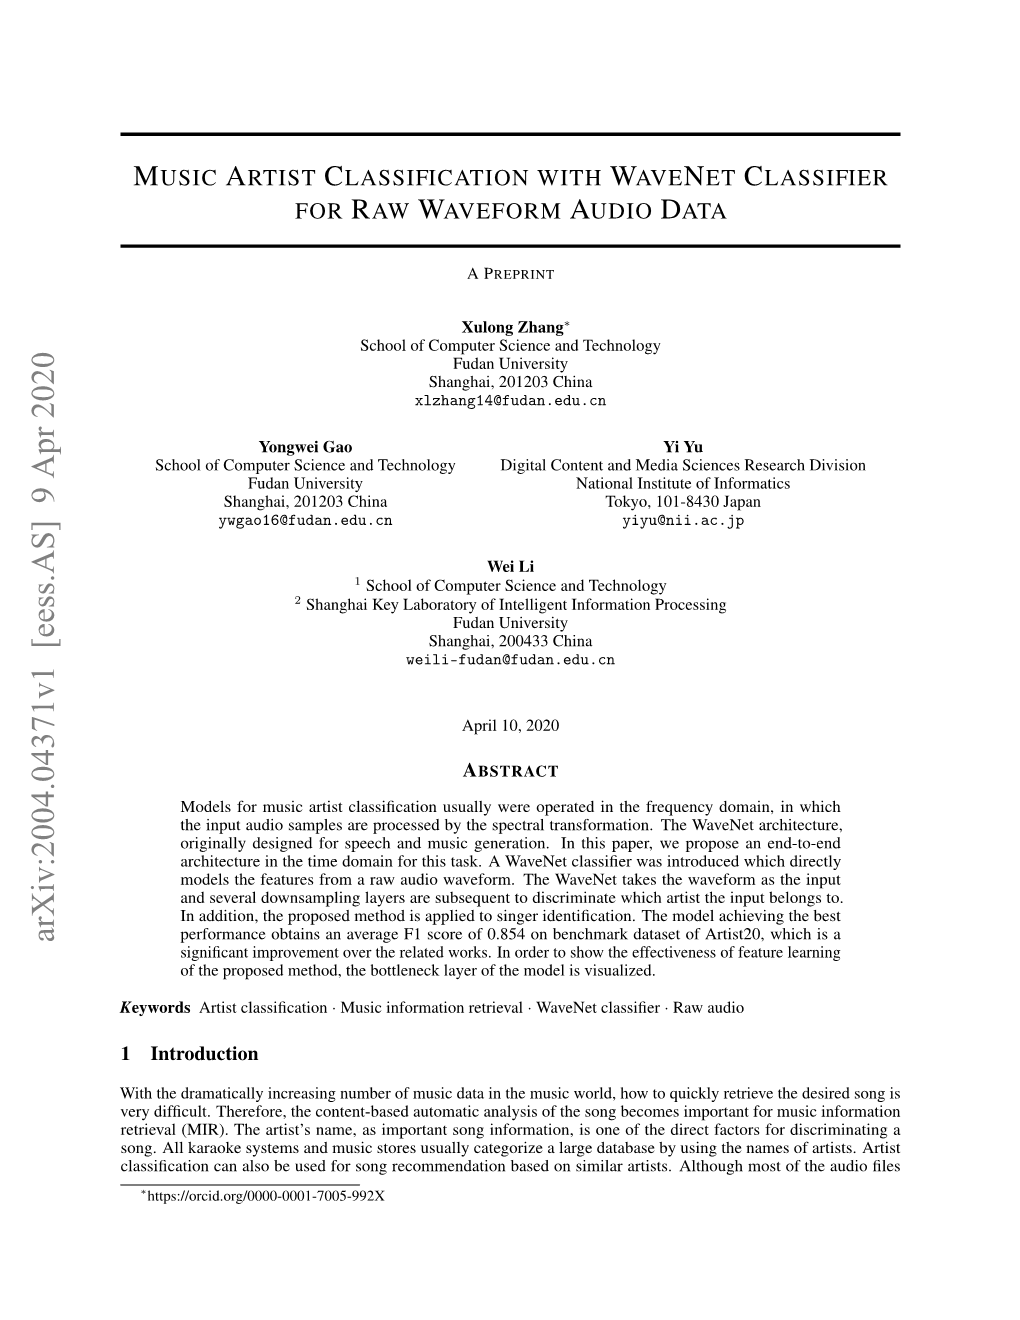 Music Artist Classification with Wavenet Classifier for Raw Waveform Audio Data